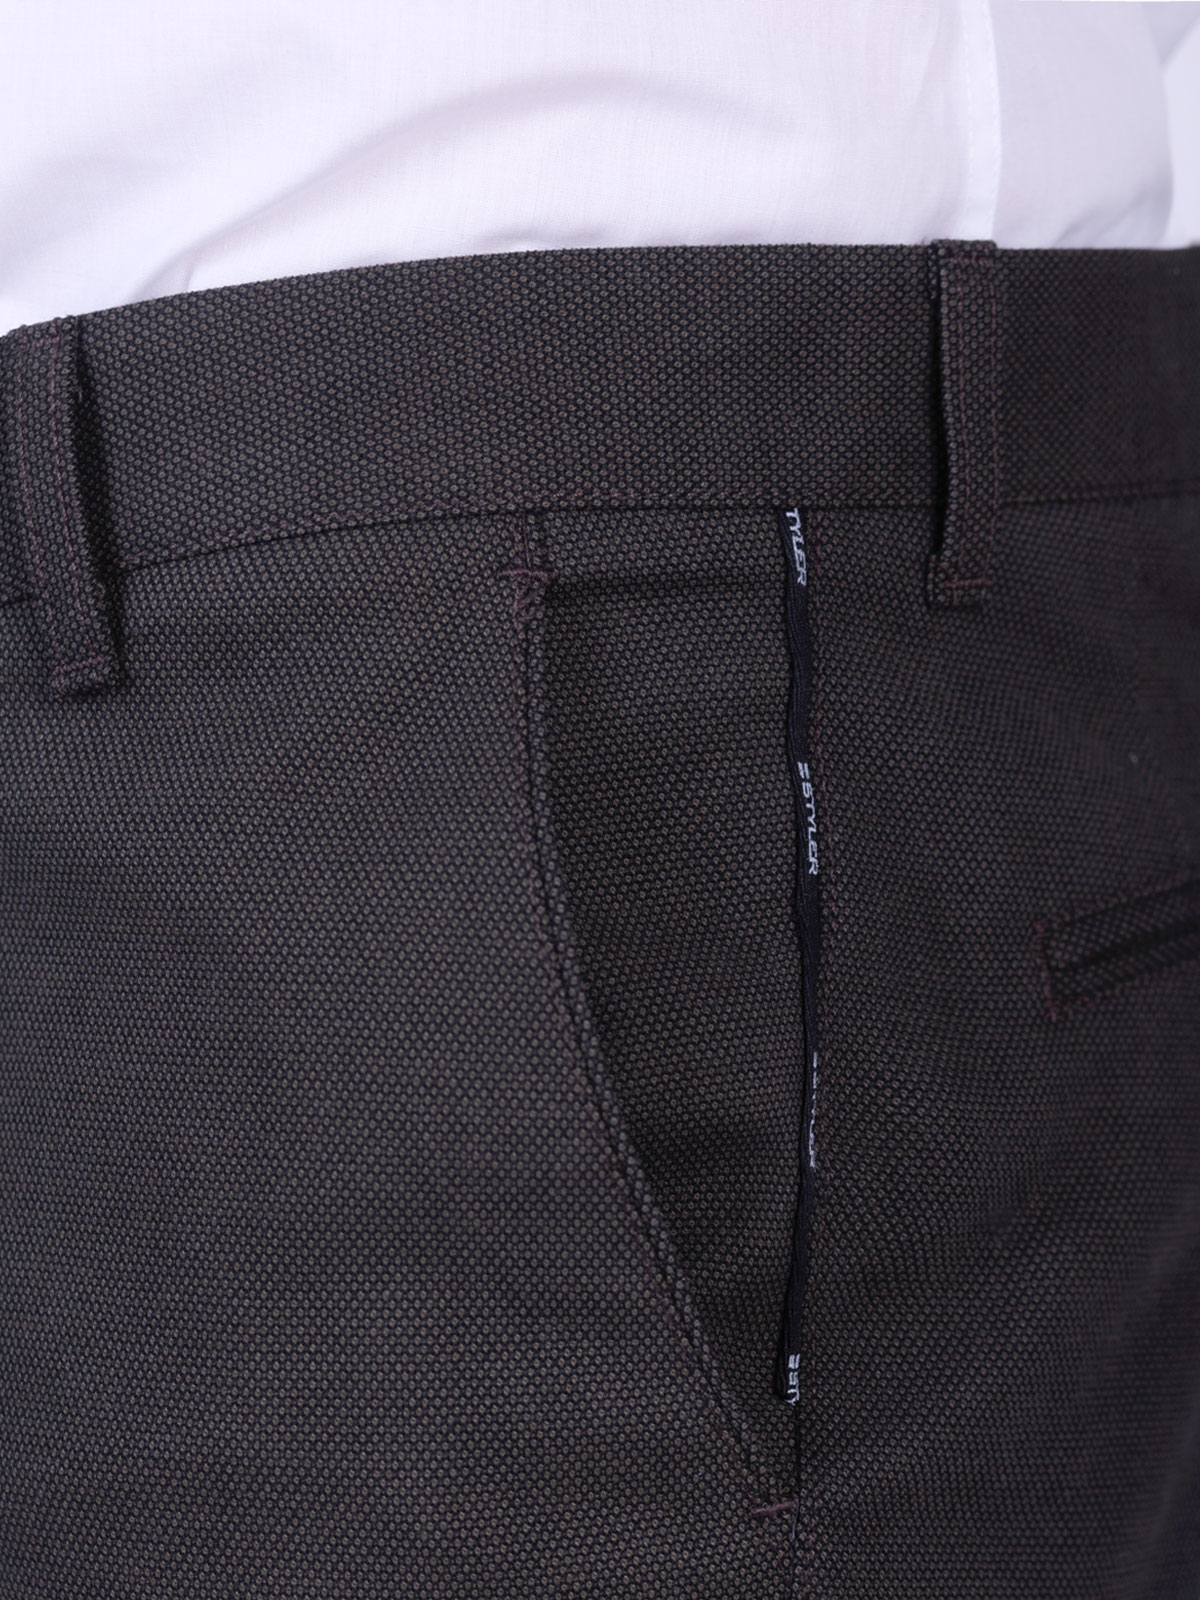 Pants in dark khaki color - 60303 € 66.37 img3